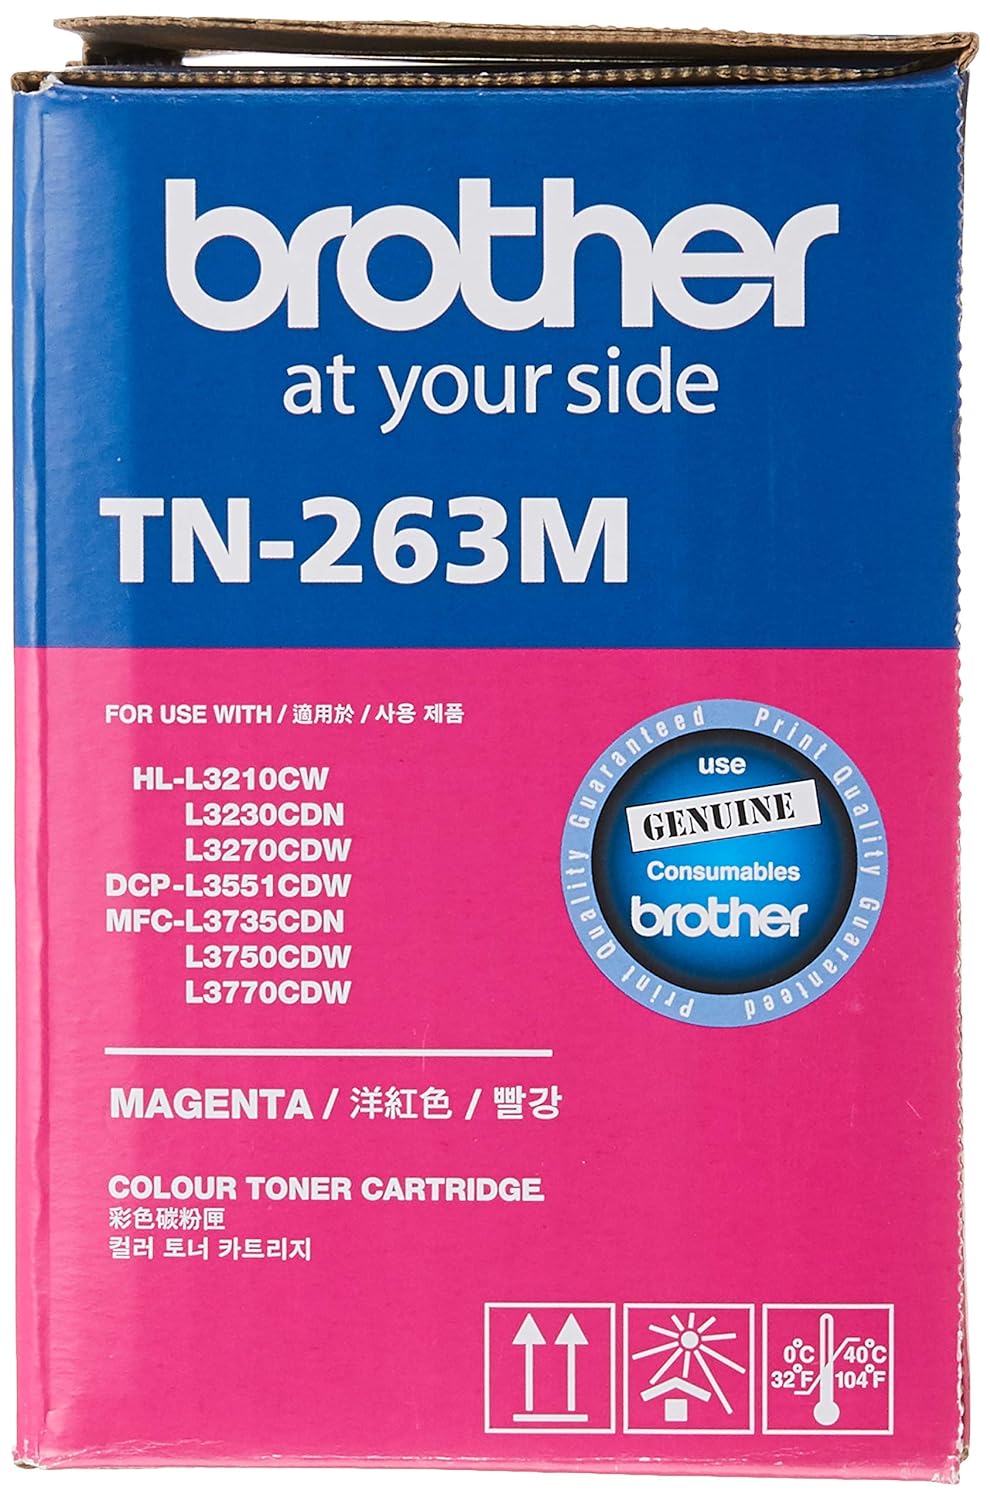 Brother TN-263M Magenta Toner Cartridge